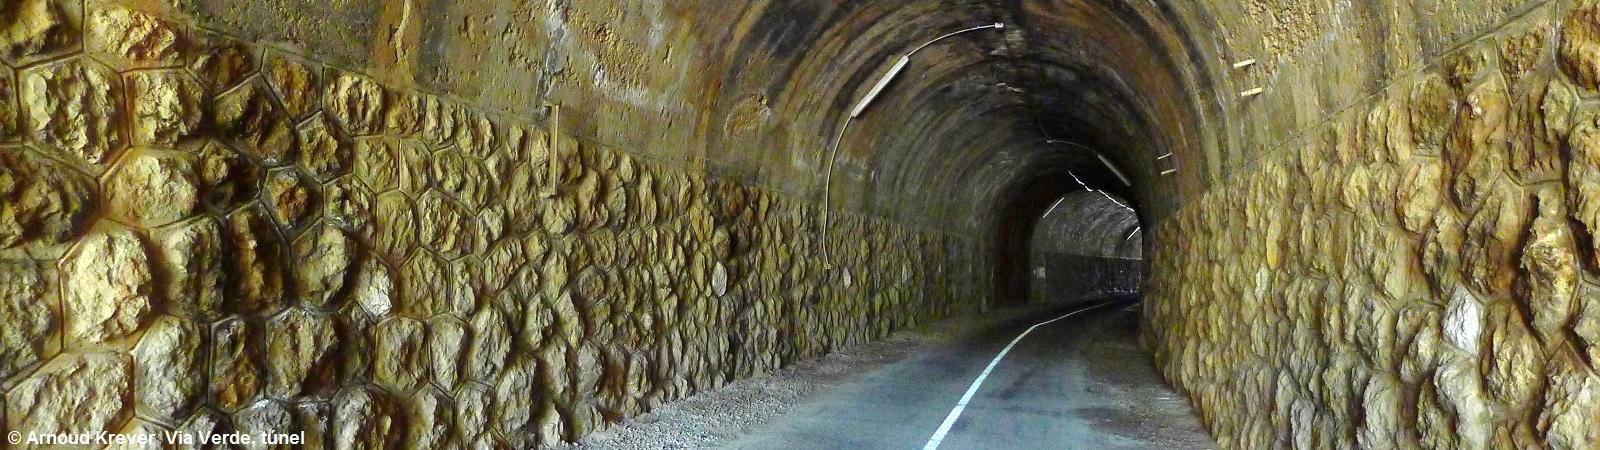 17Ebro (413) Via Verde, tunnel